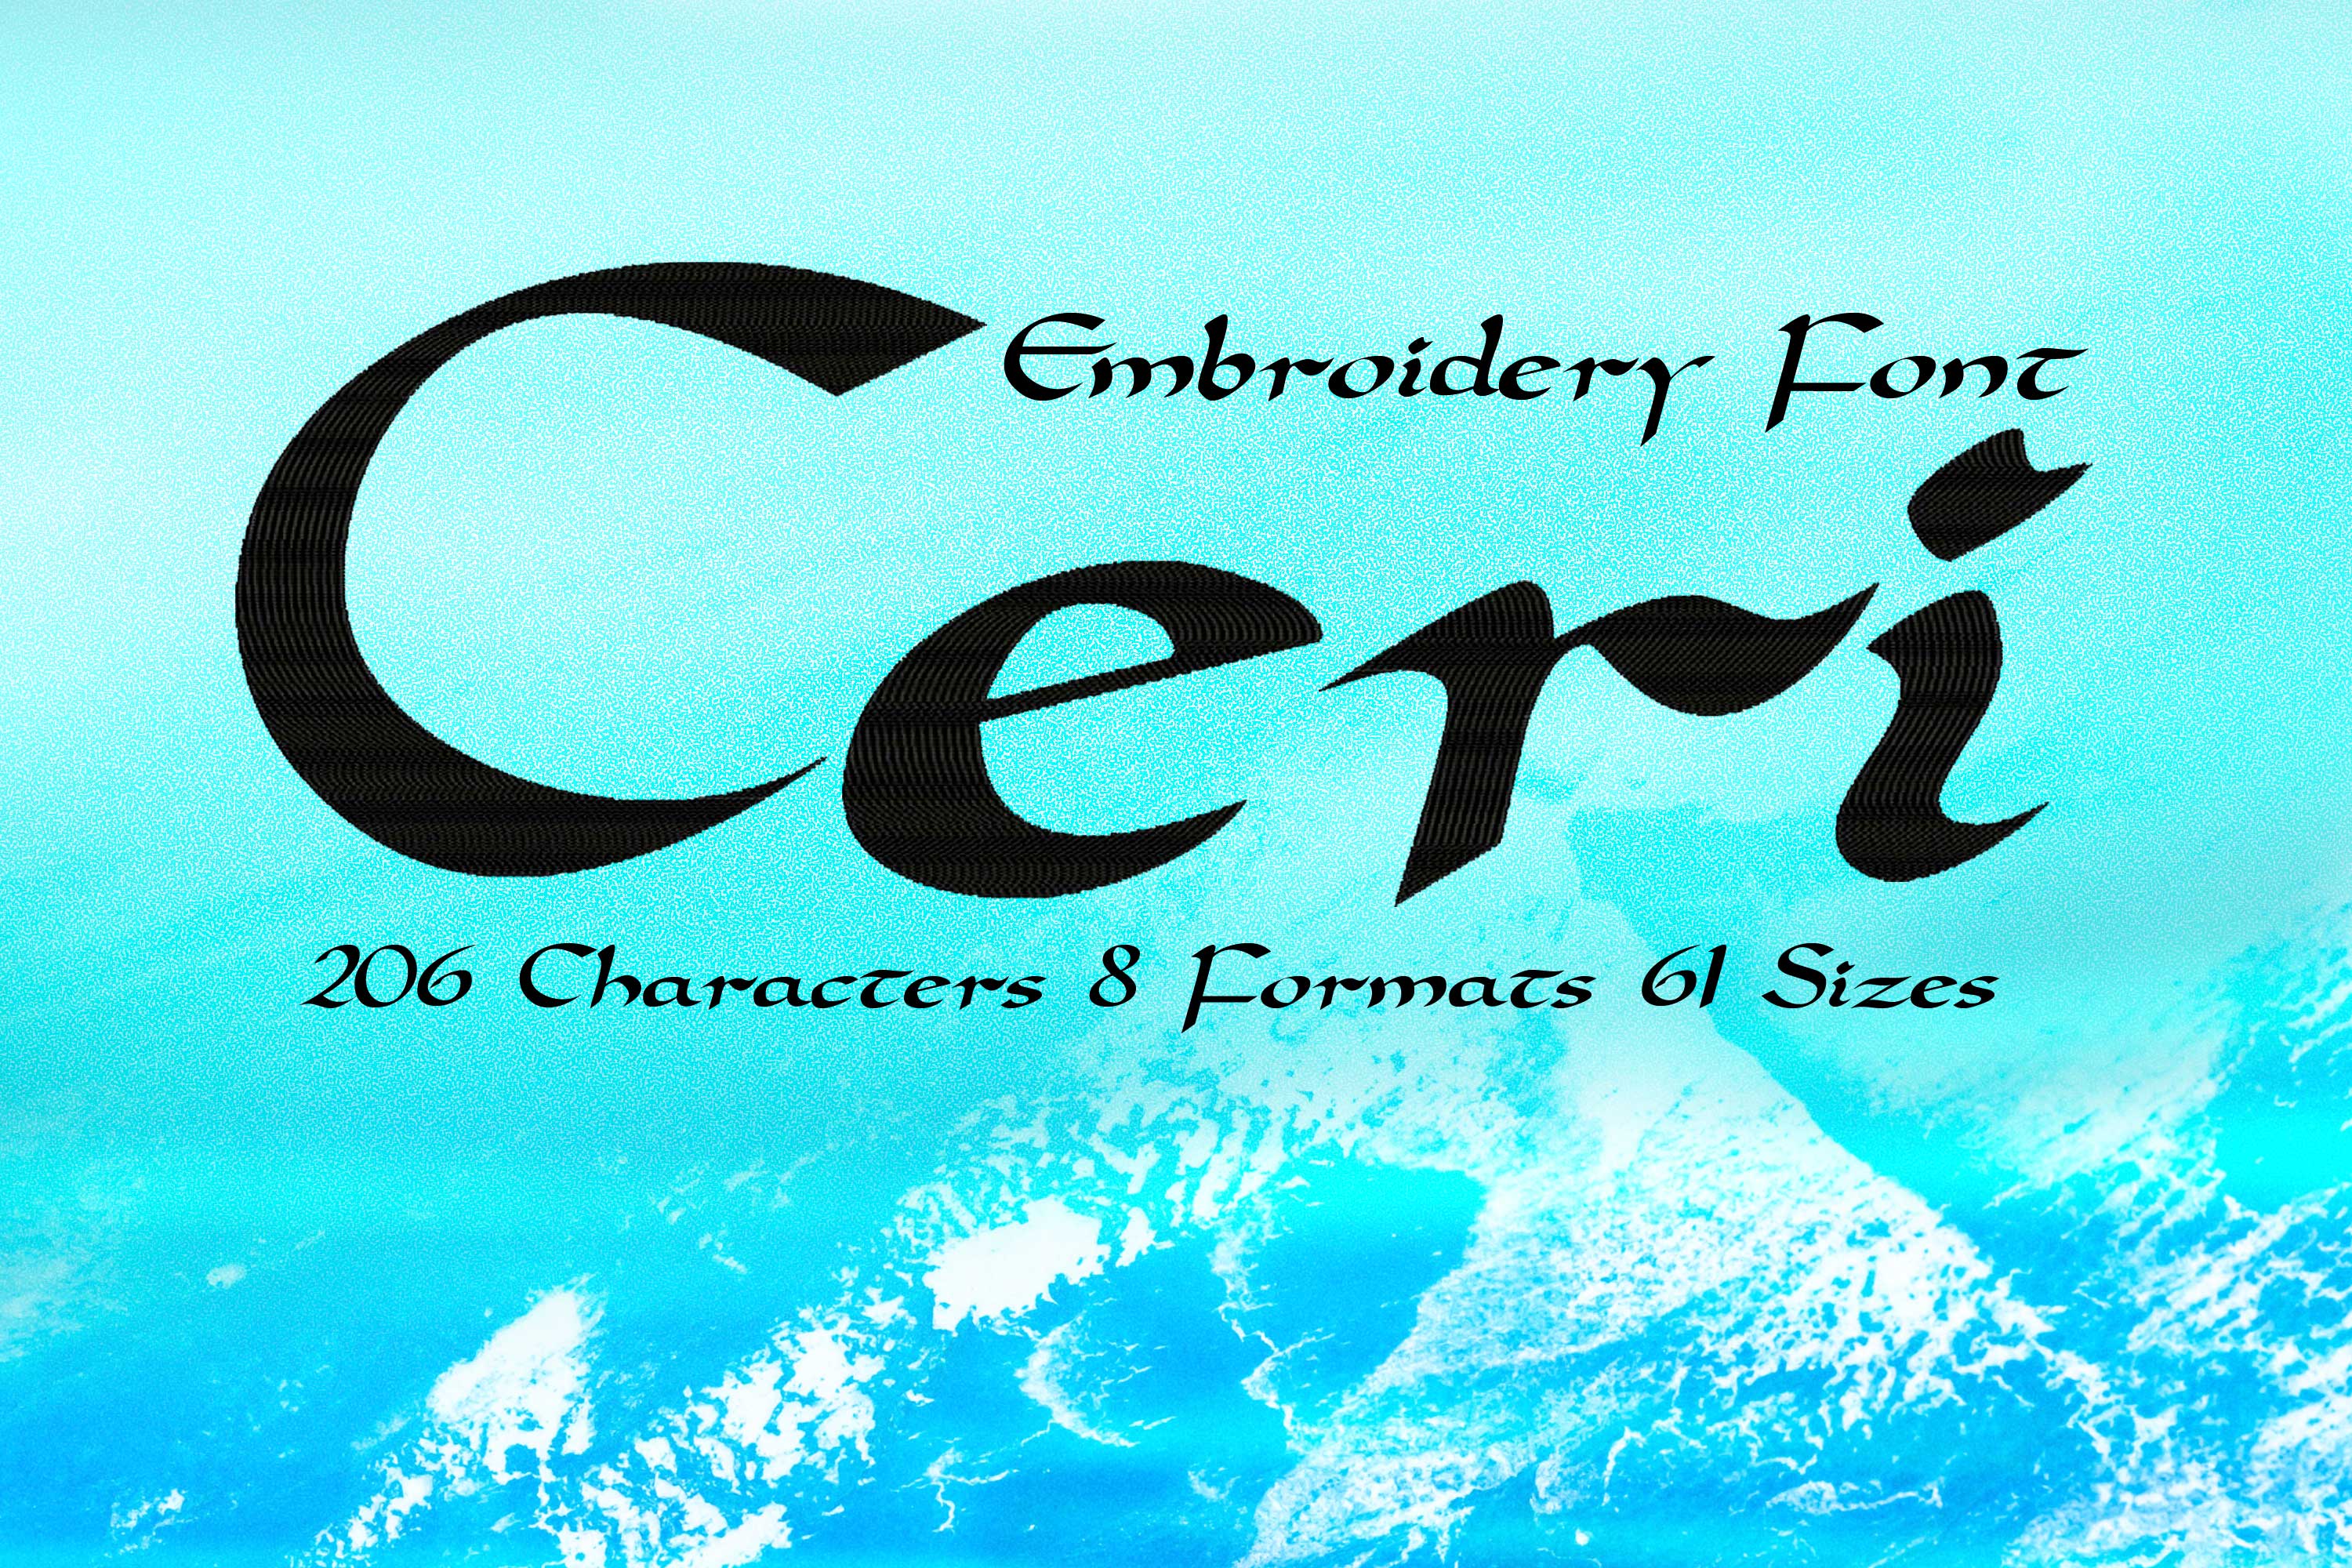 Ceri Handwritten Calligraphy Letters Font